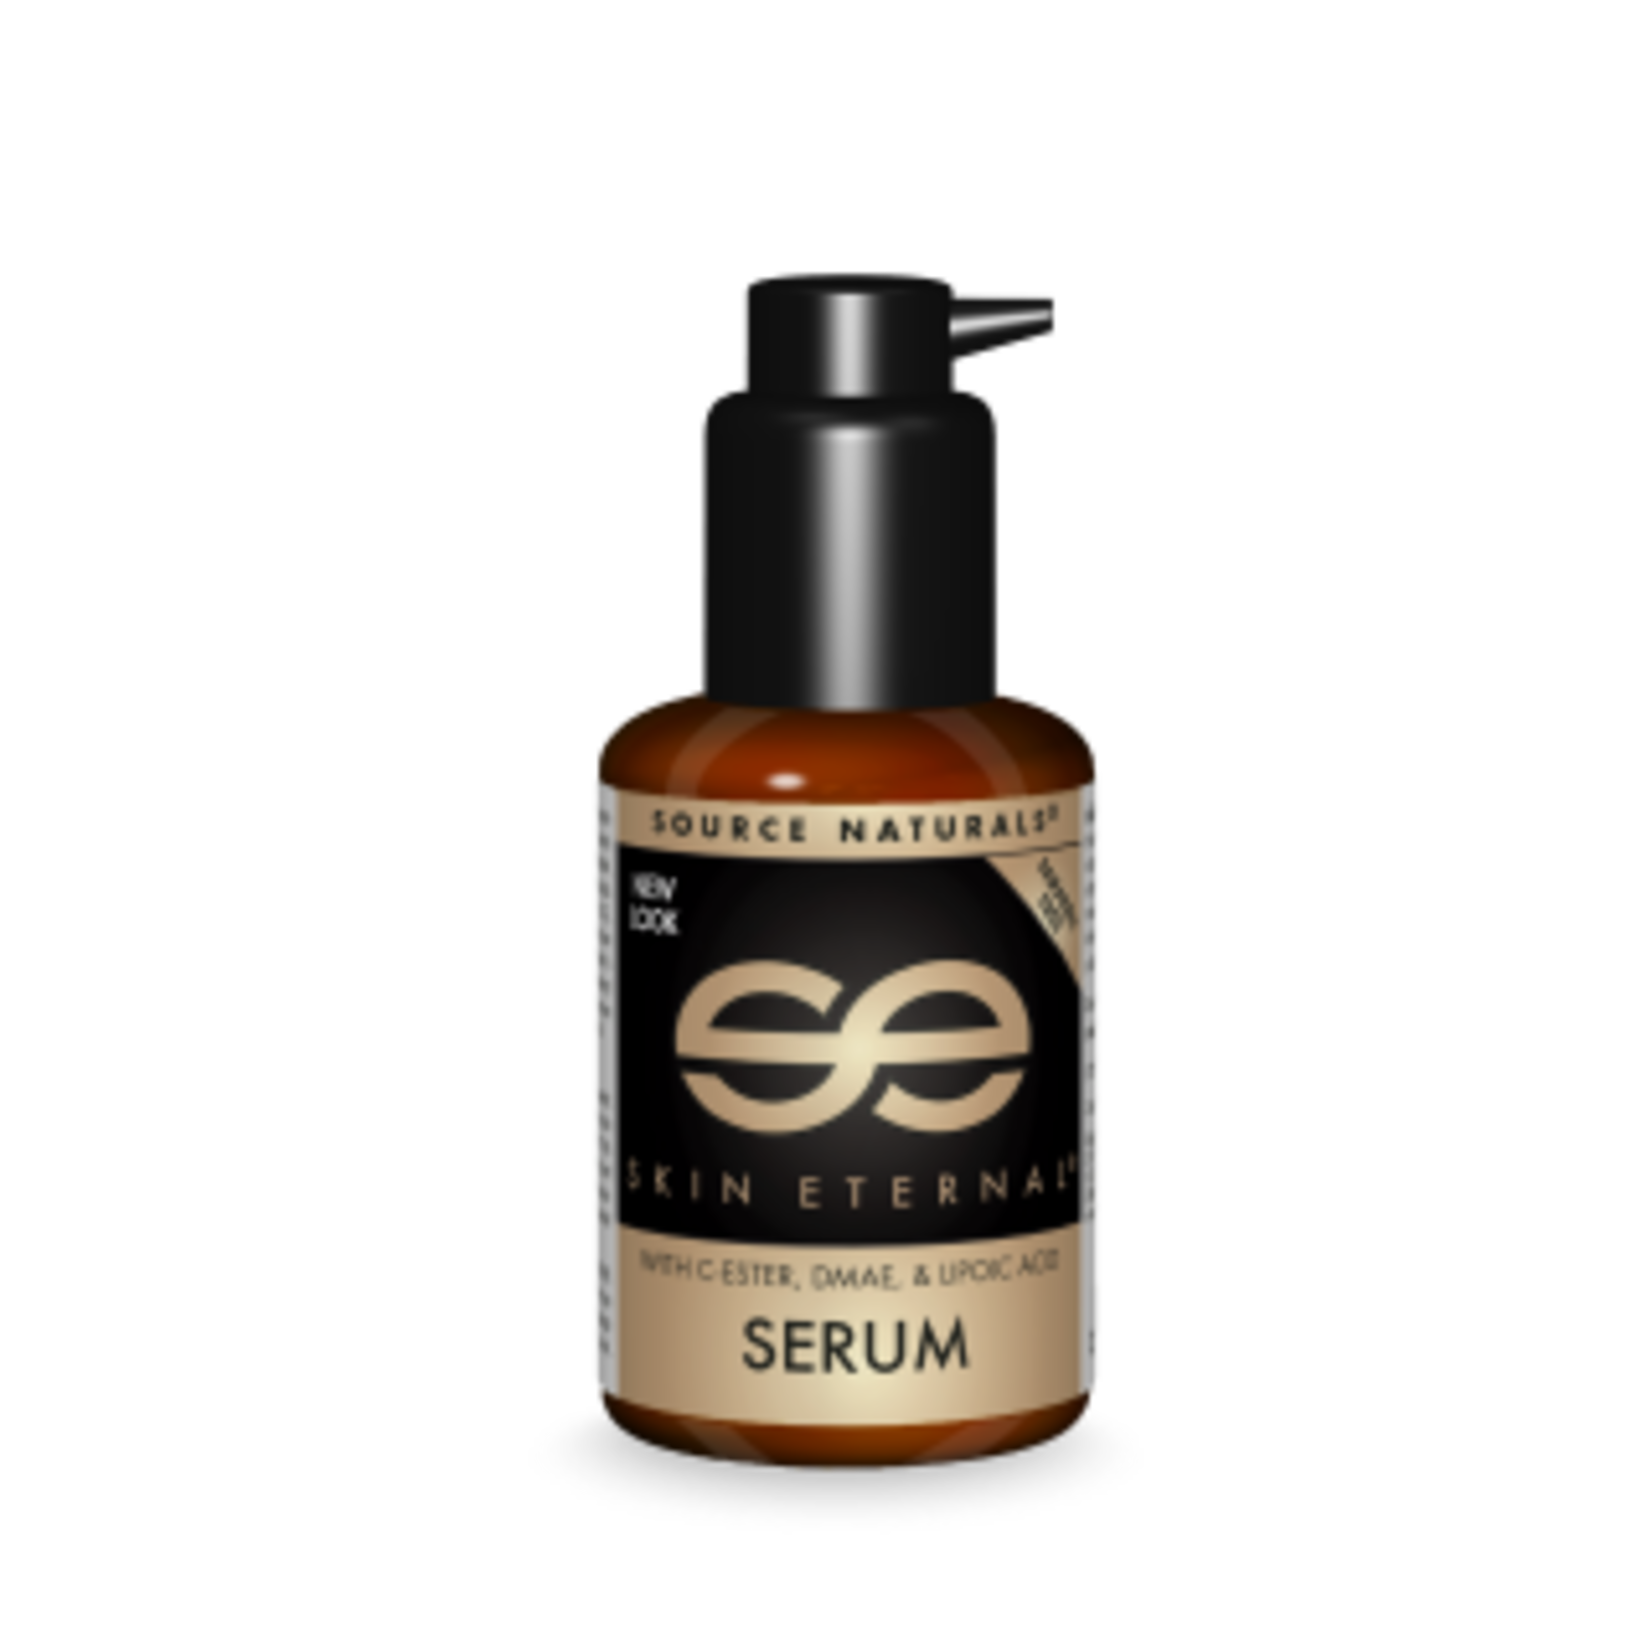 Source Naturals Source Naturals - Skin Eternal Serum - 1.7 oz